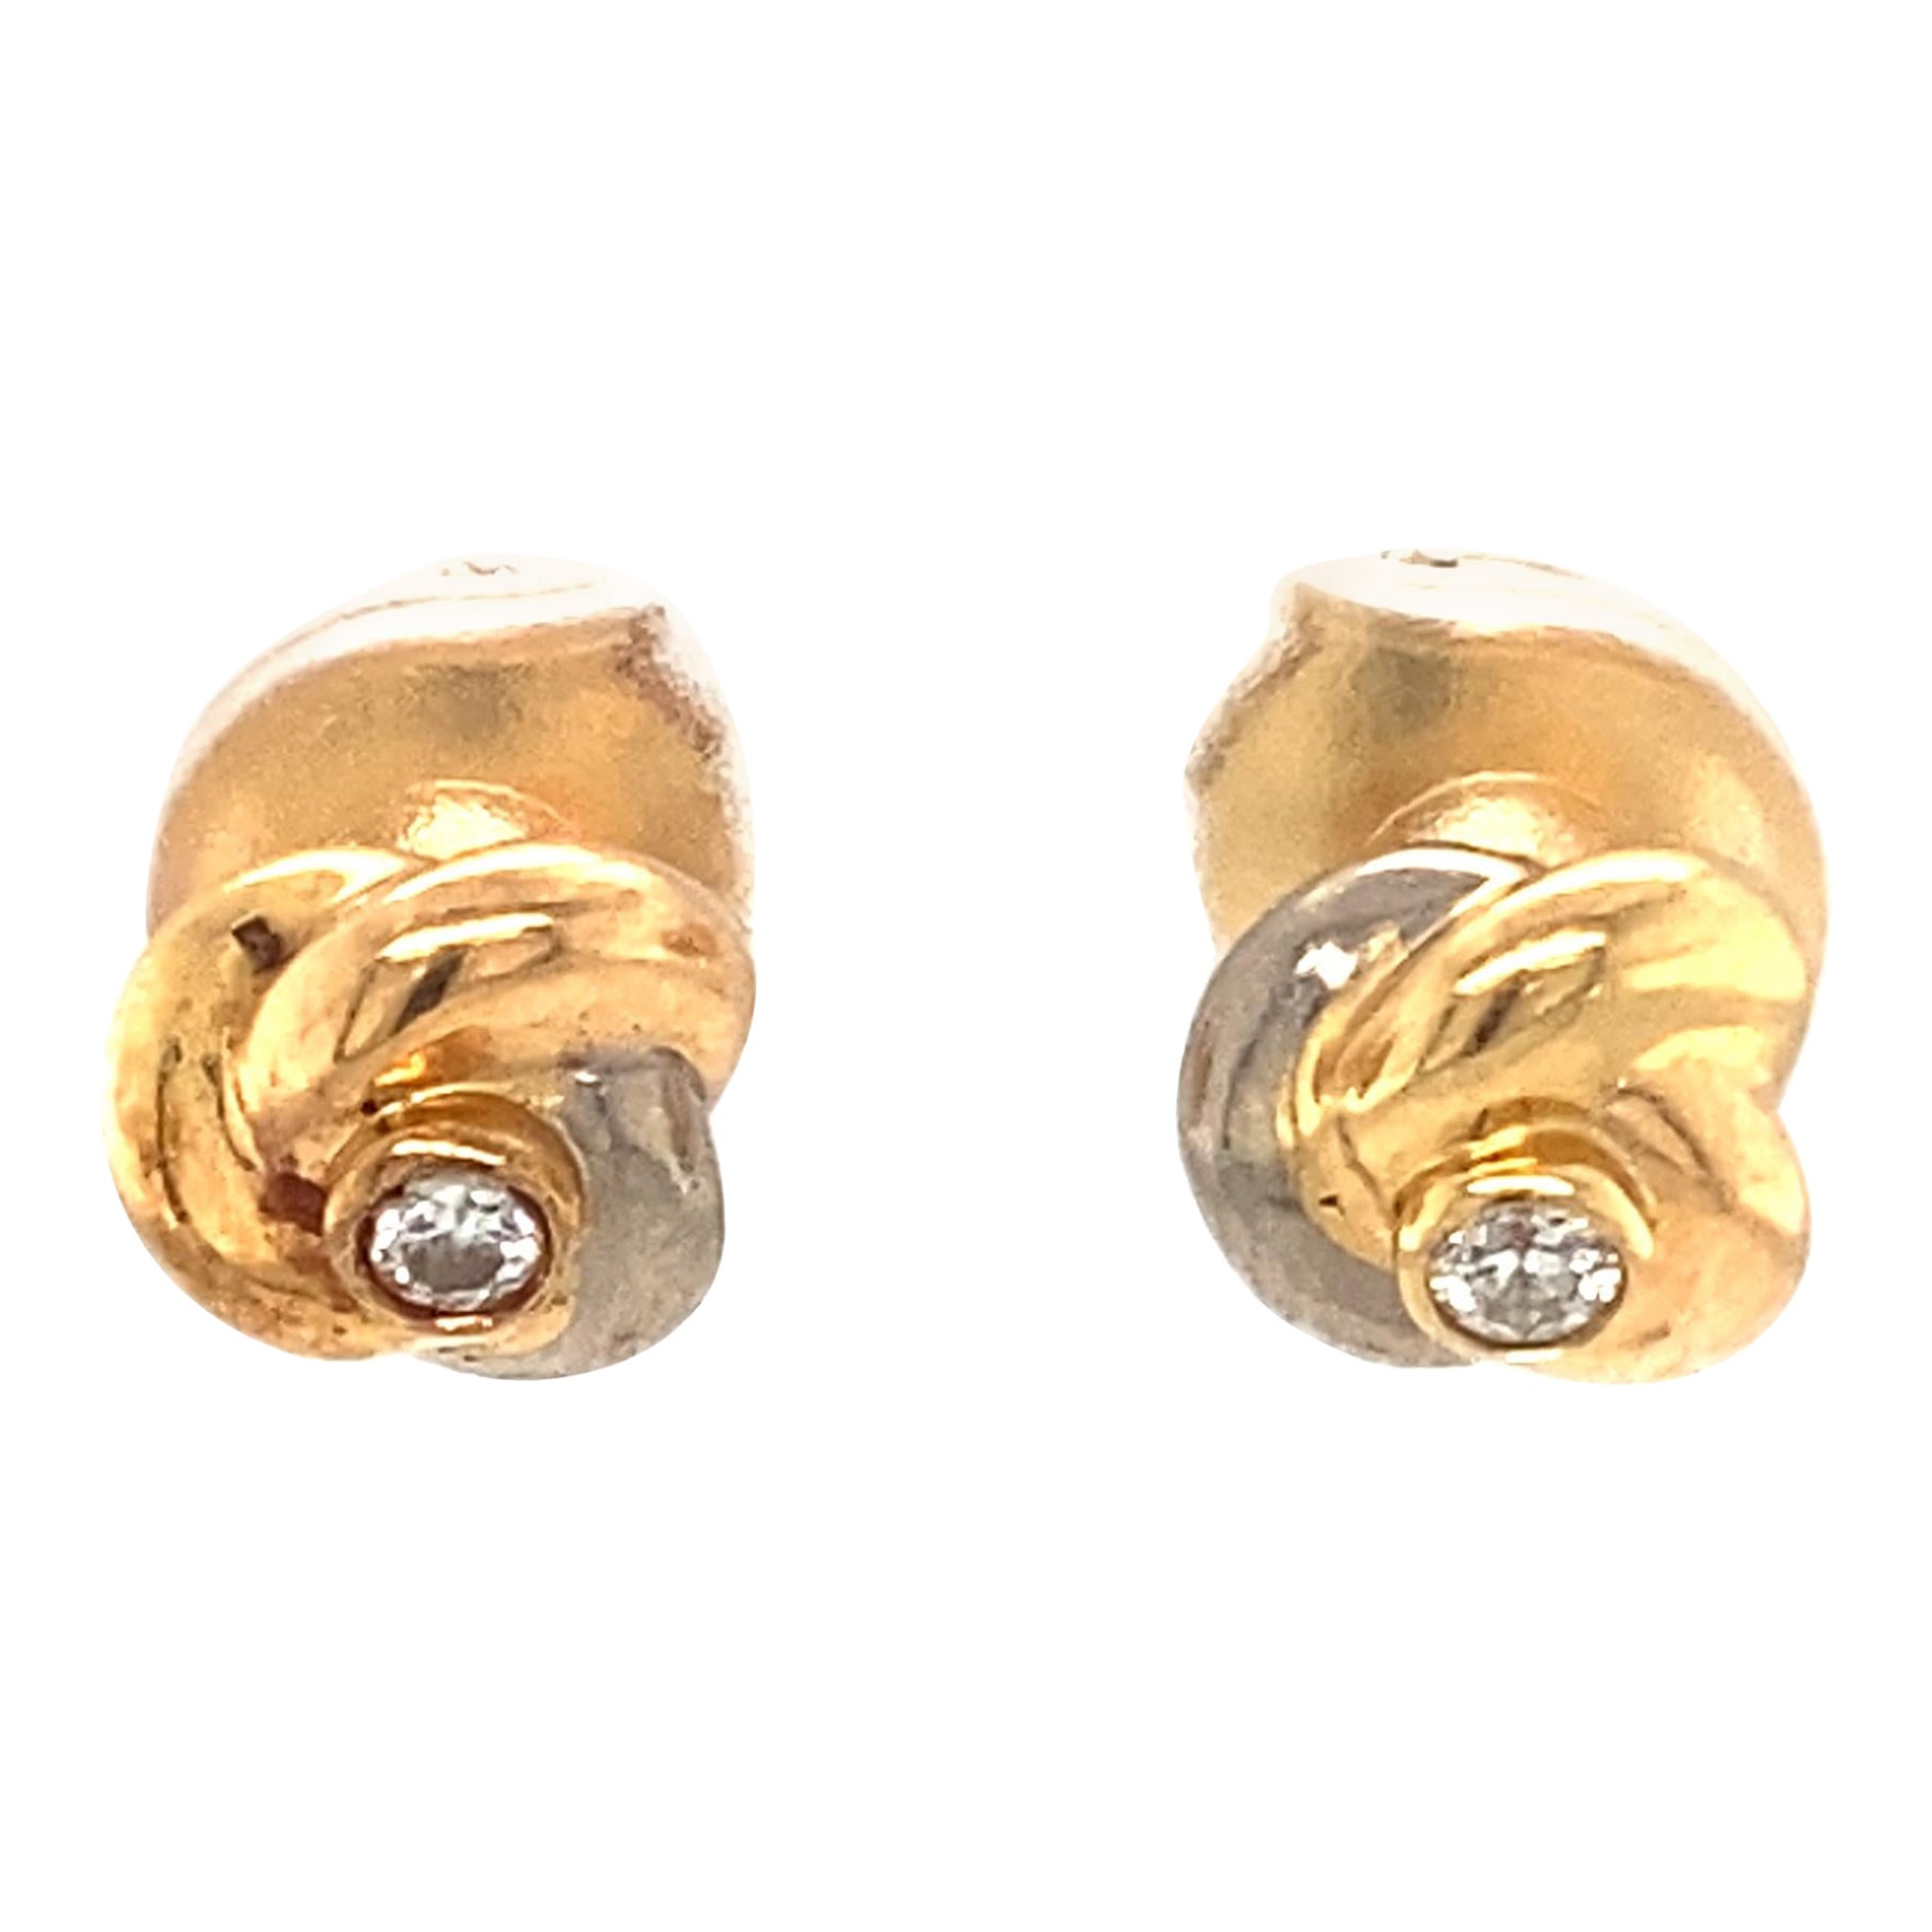 Cartier .08 Carat Diamond Swirl Earrings in 18 Karat Yellow and White Gold